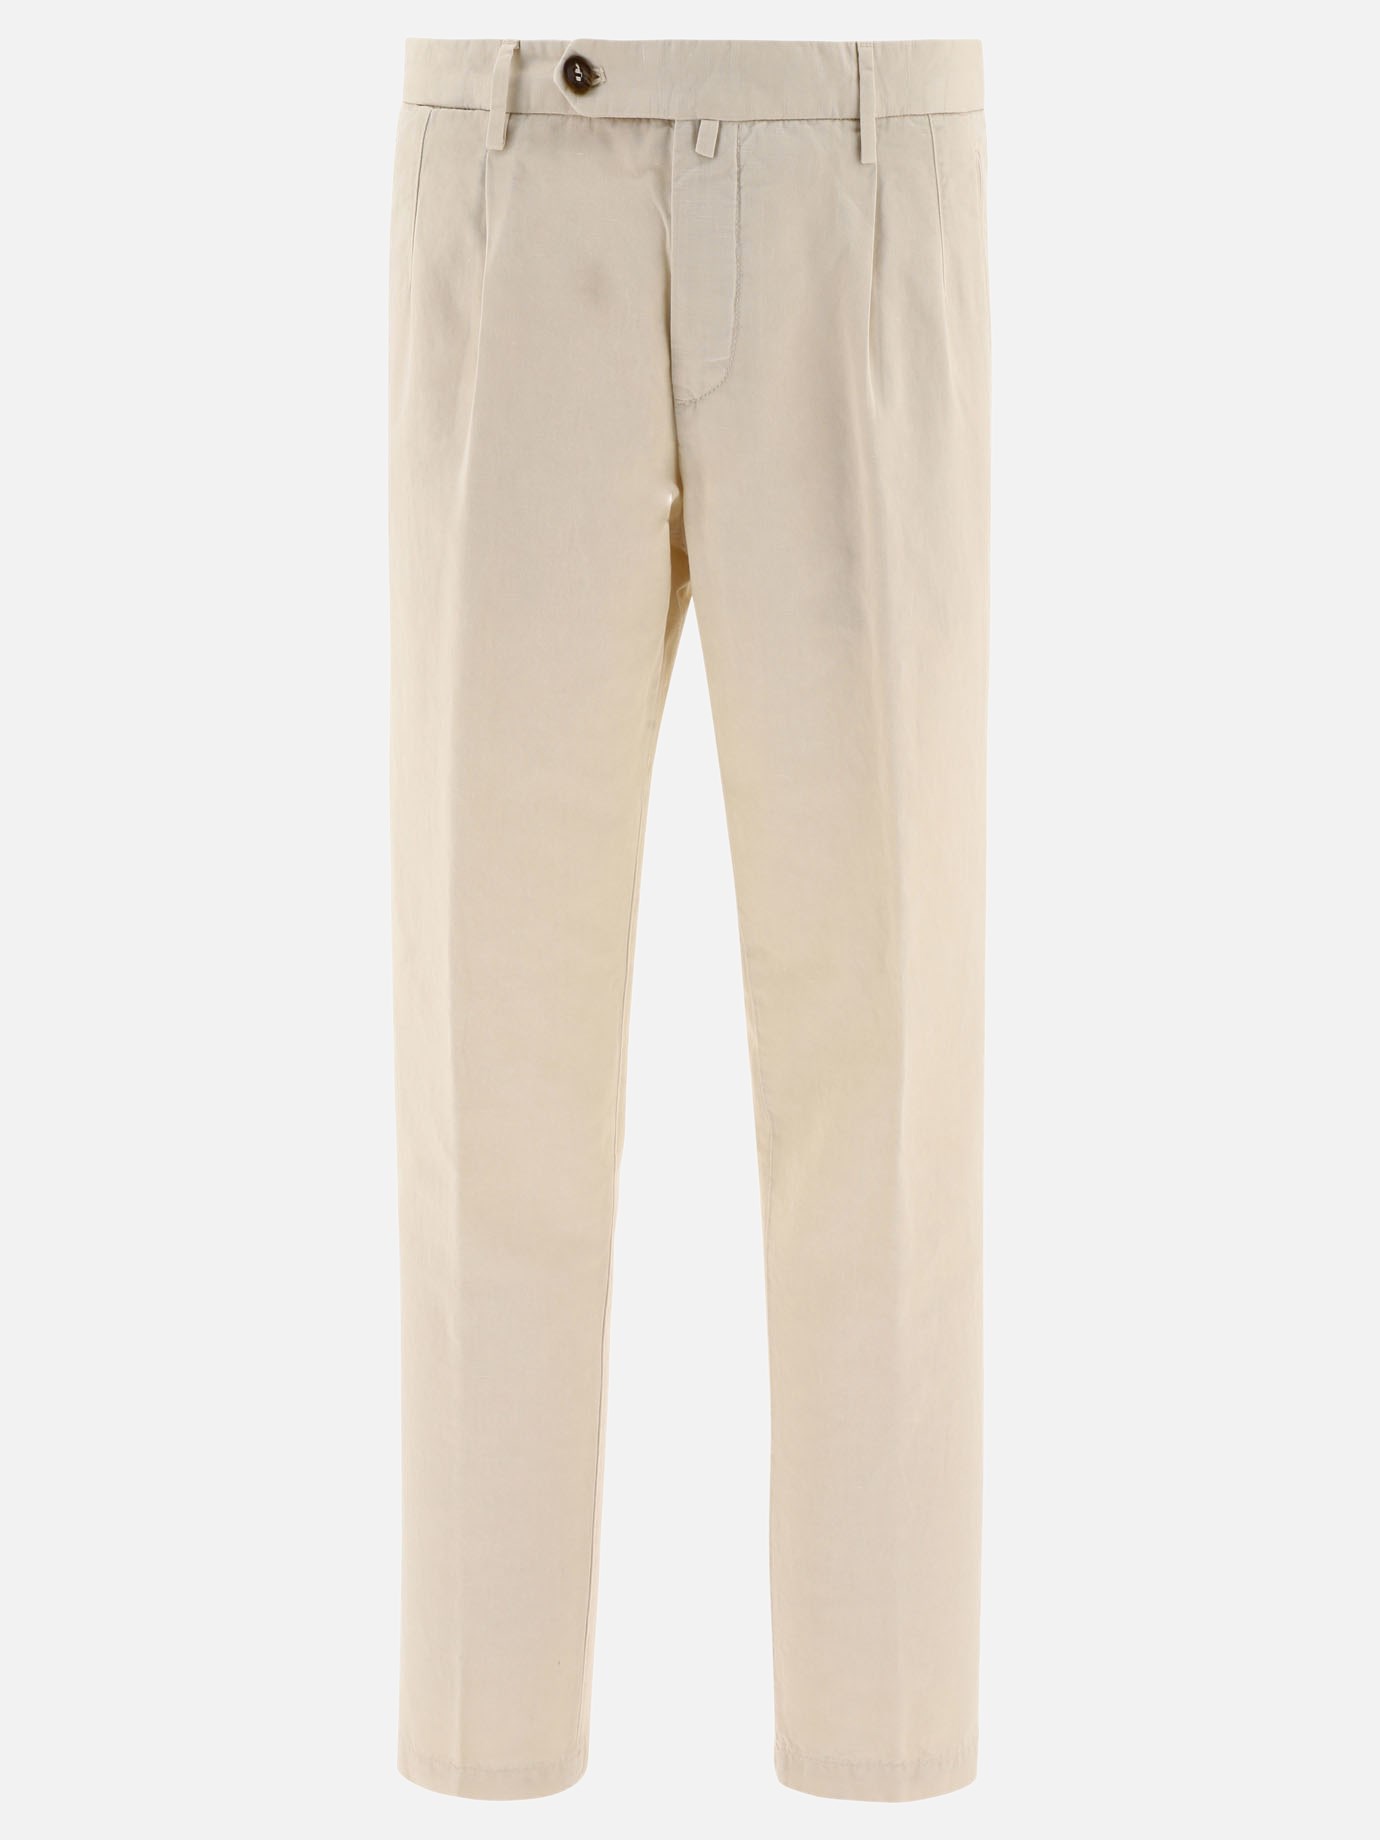 Pantaloni  Cernobbio by Briglia 1949 - 2